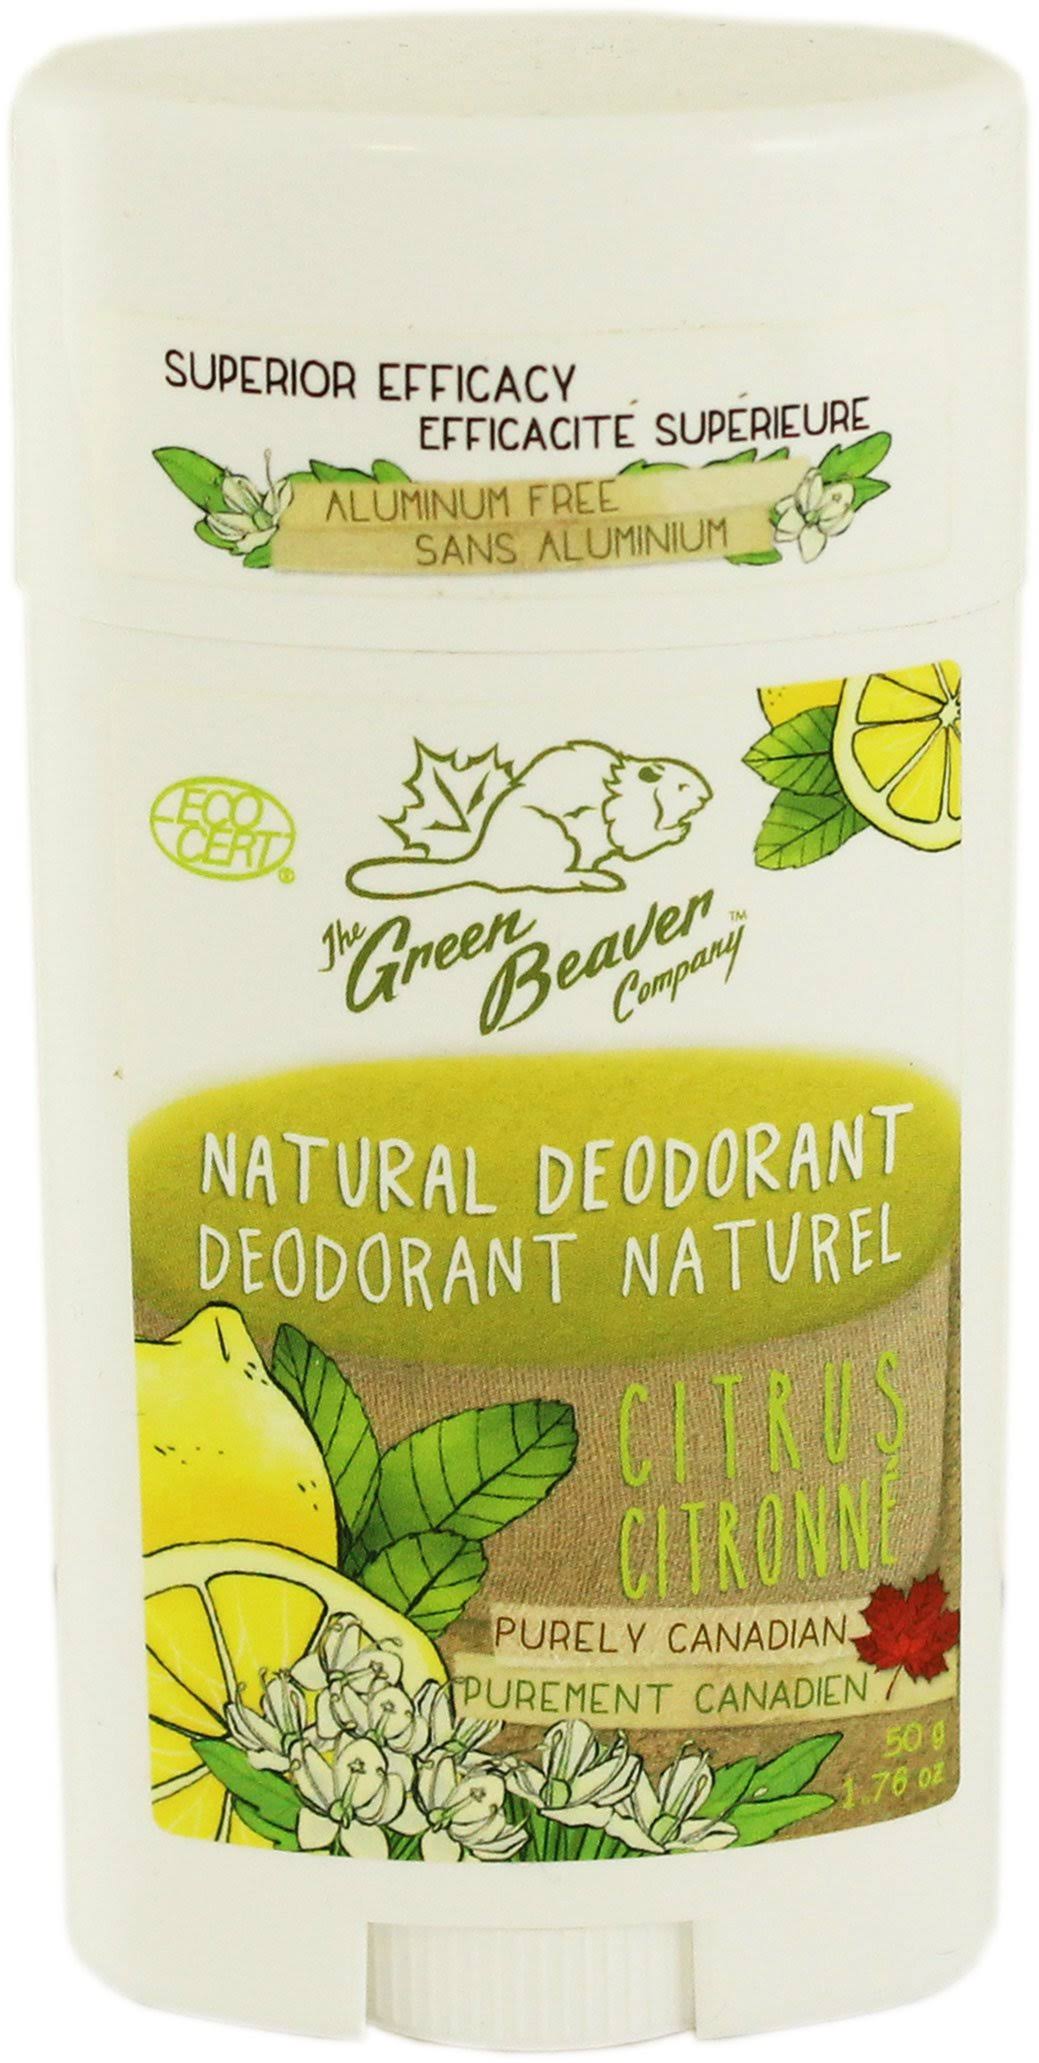 Citrus Deodorant, 1.76 oz, Green Beaver